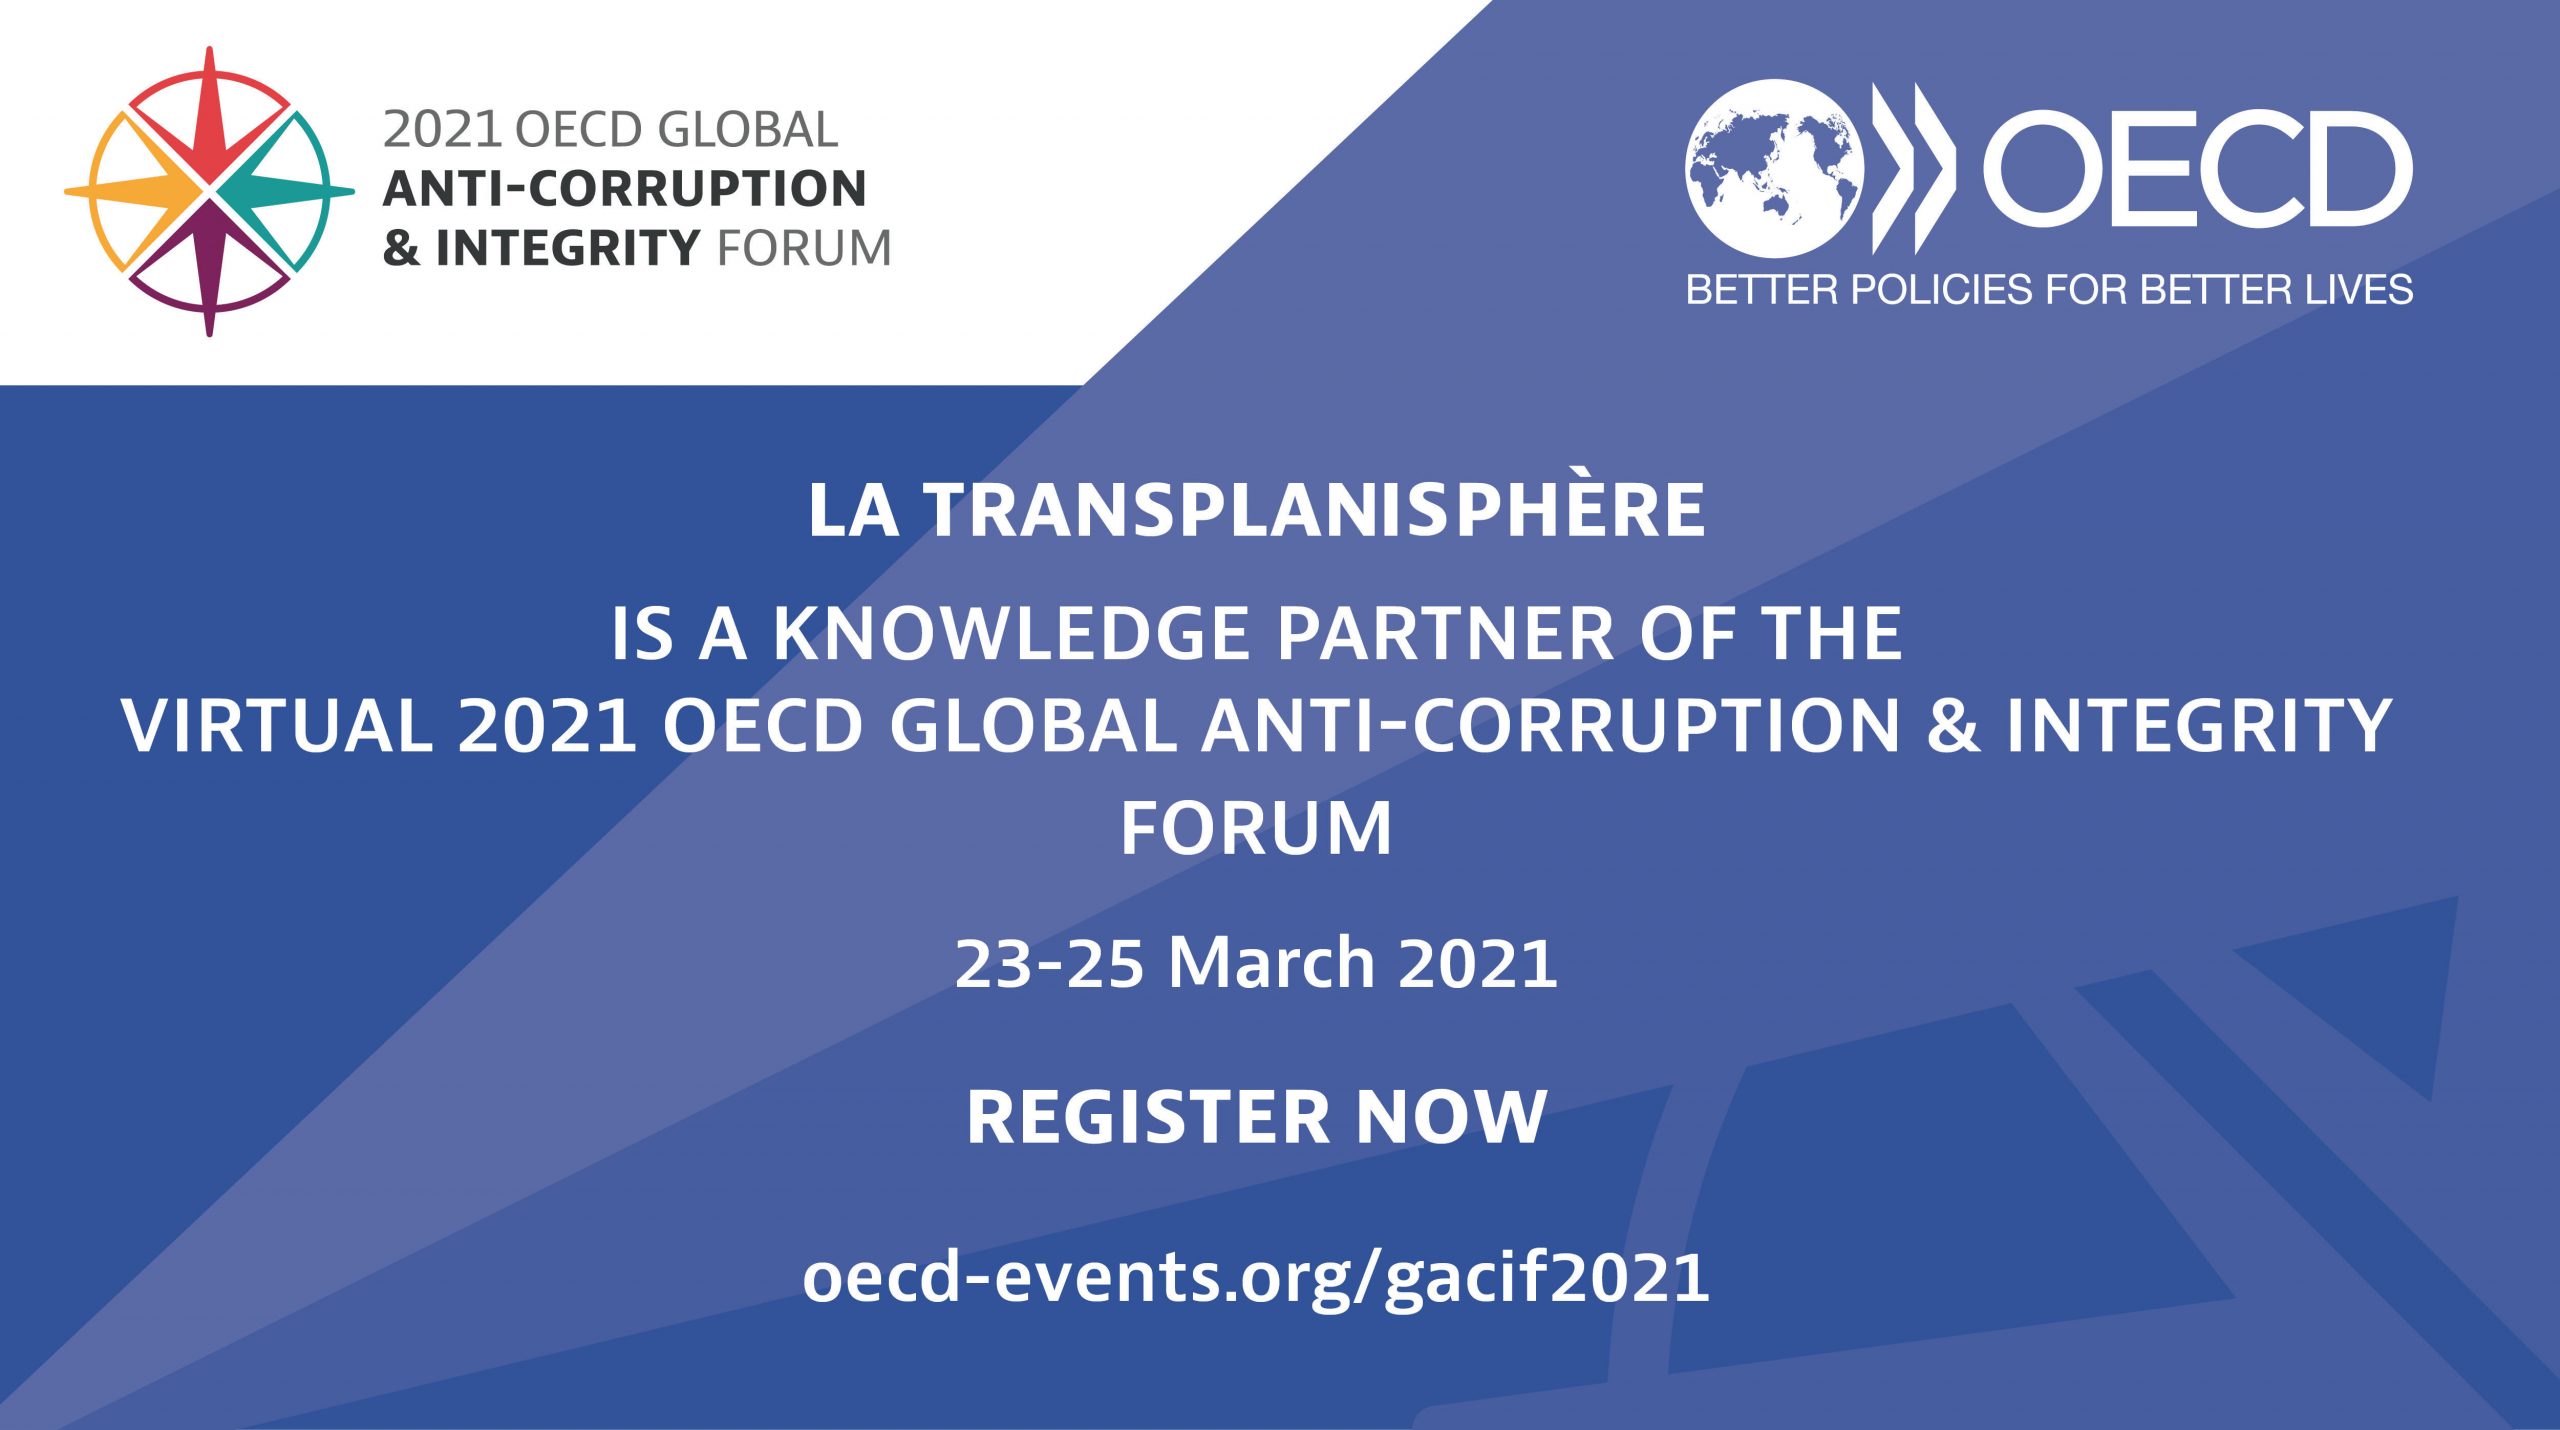 La Transplanisphère is at the 2021 OECD Global Integrity Forum